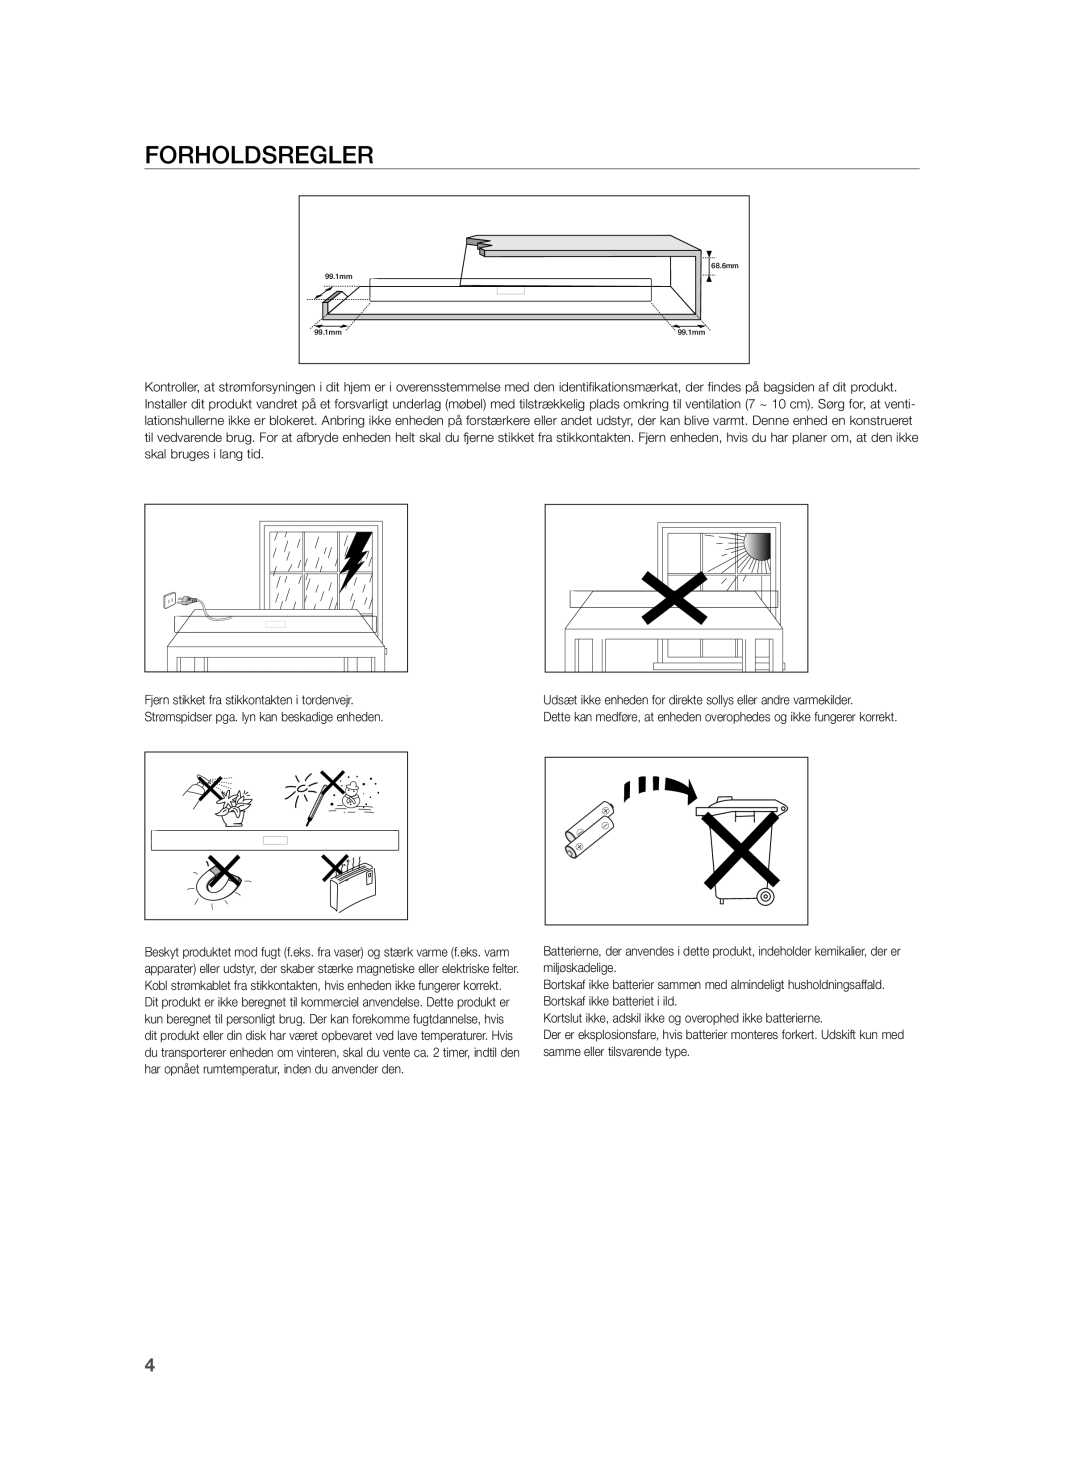 Samsung HW-H355/XE manual Forholdsregler 